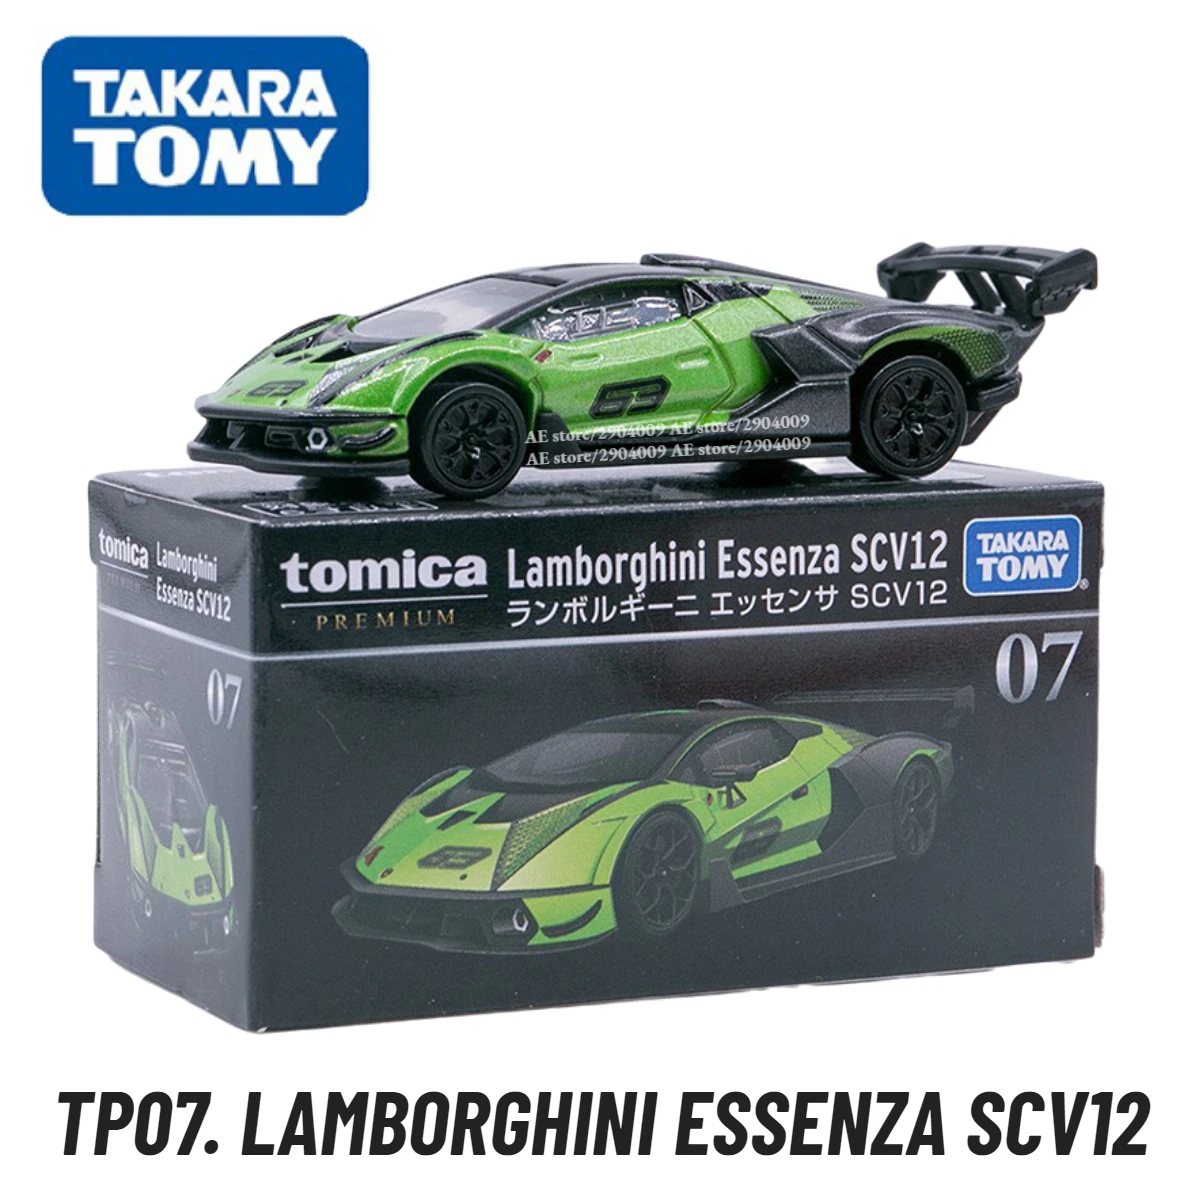 Takara Tomy Tomica Premium TP, 07. LAMBORGHINI ESSENZA SCV12 Scale Car Model Replica Collection, Kids Xmas Gift Toys for Boys